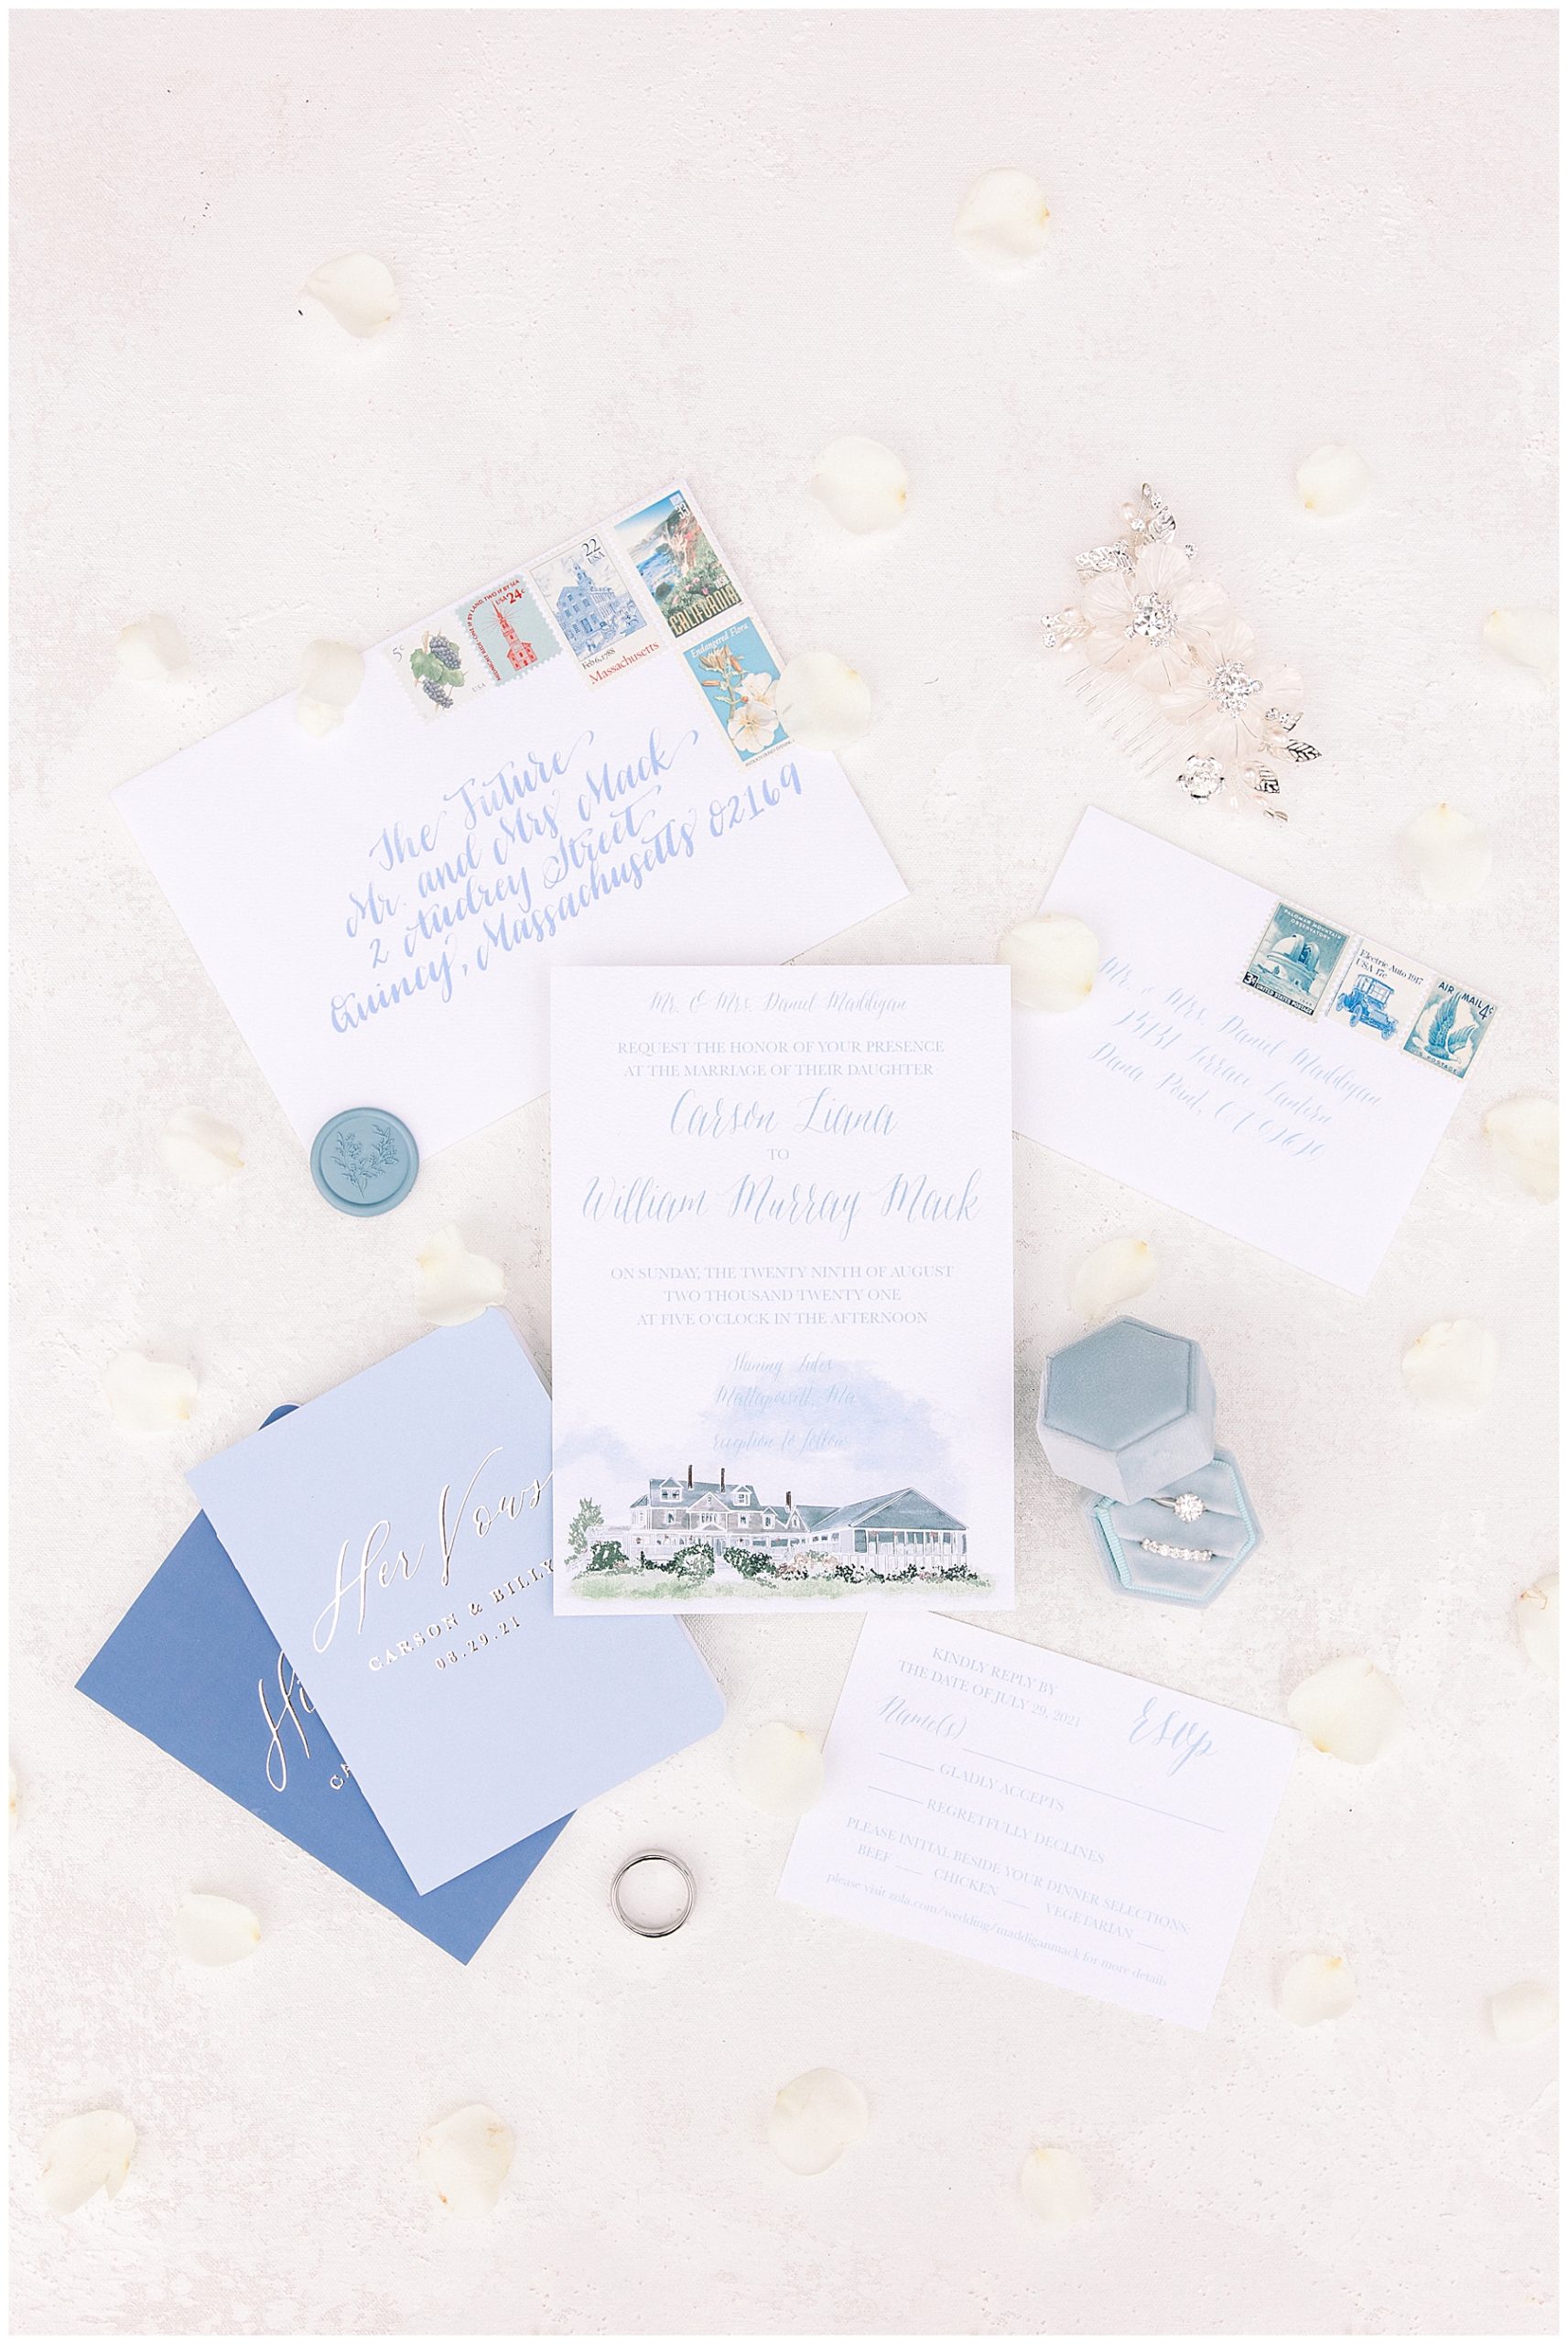 Shining Tides Wedding invitations + details